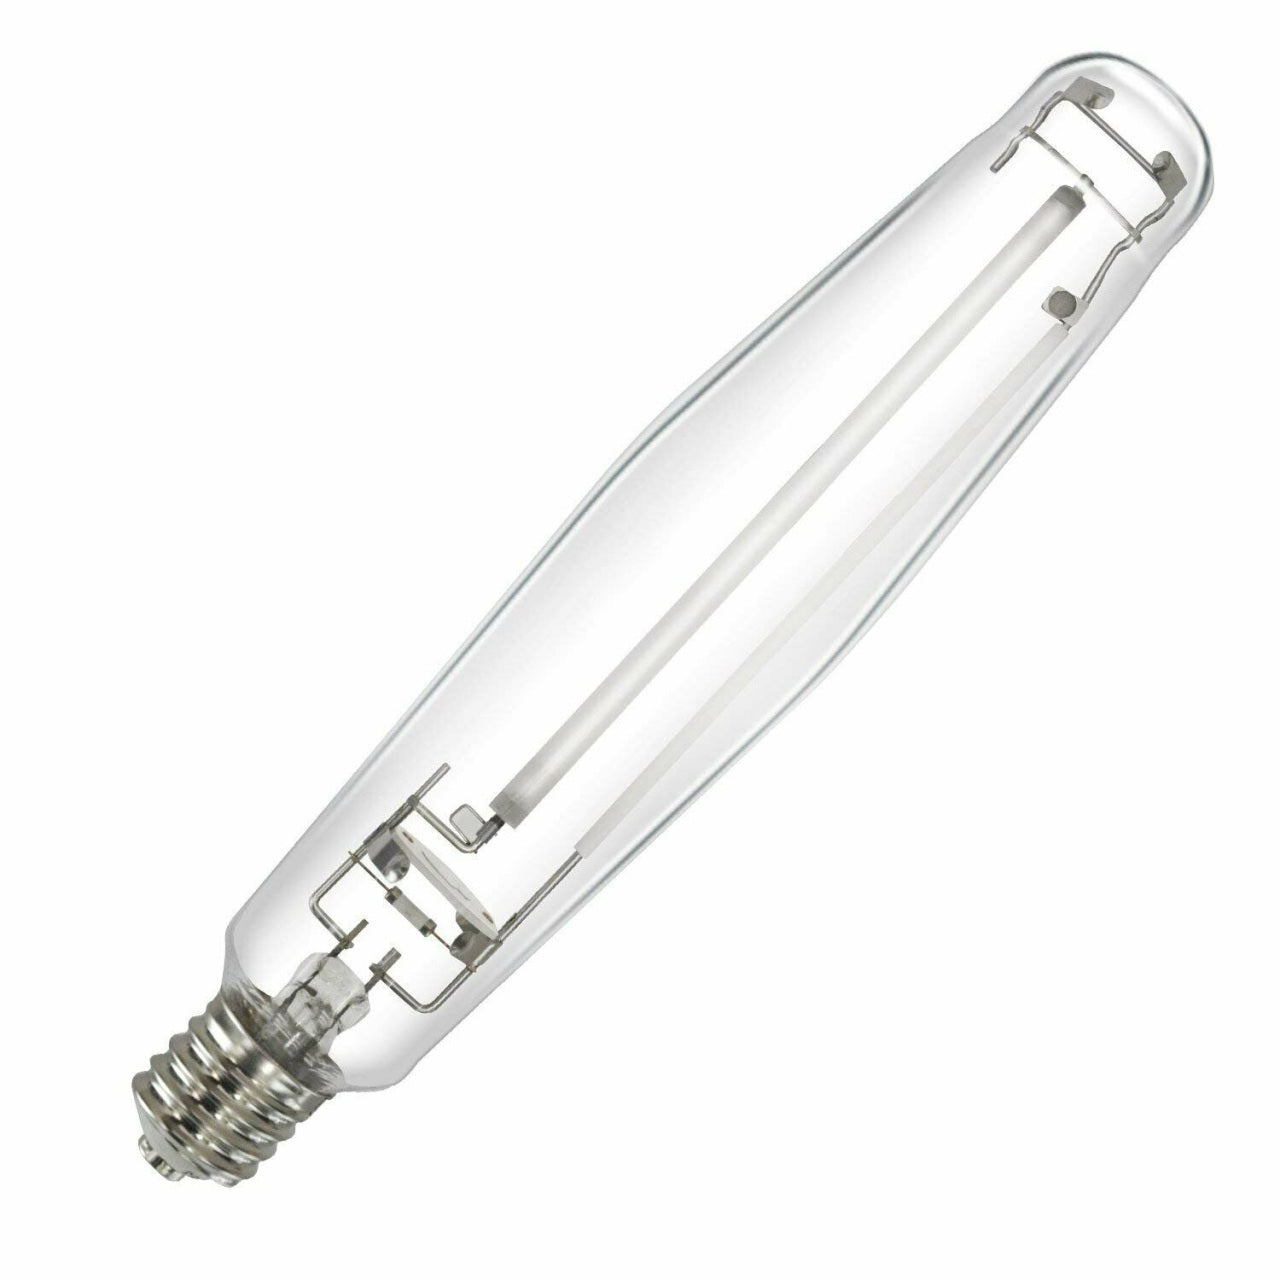 Florasun High Pressure Sodium Bulb 1000w - Lights